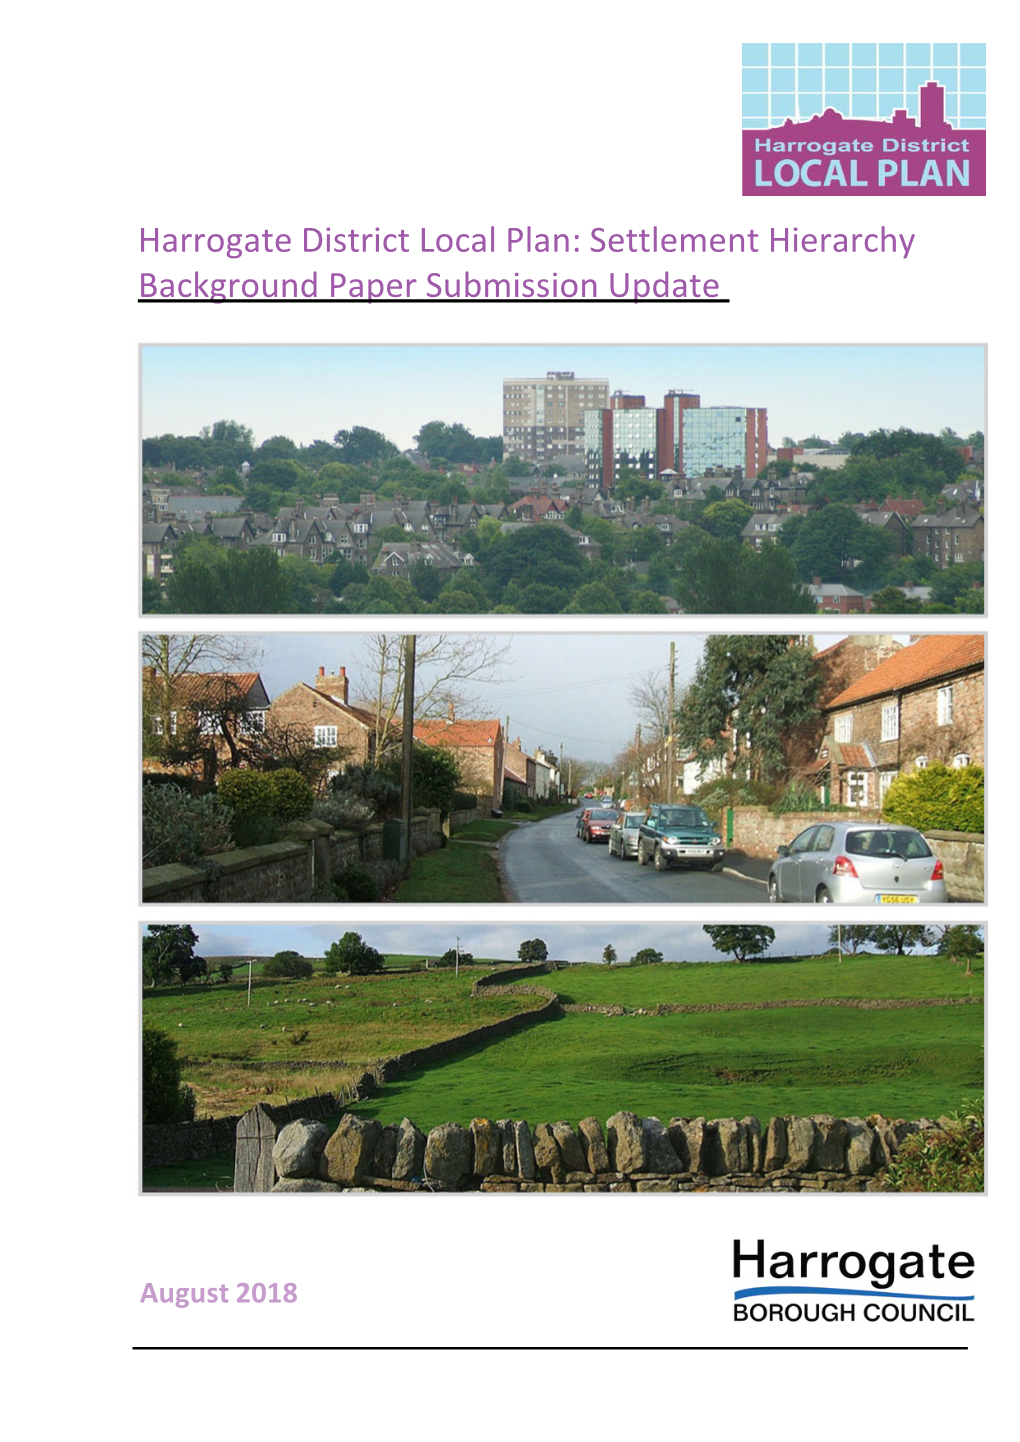 Settlement Hierarchy Background Paper Submission Update 2018 Harrogate Borough Council 1